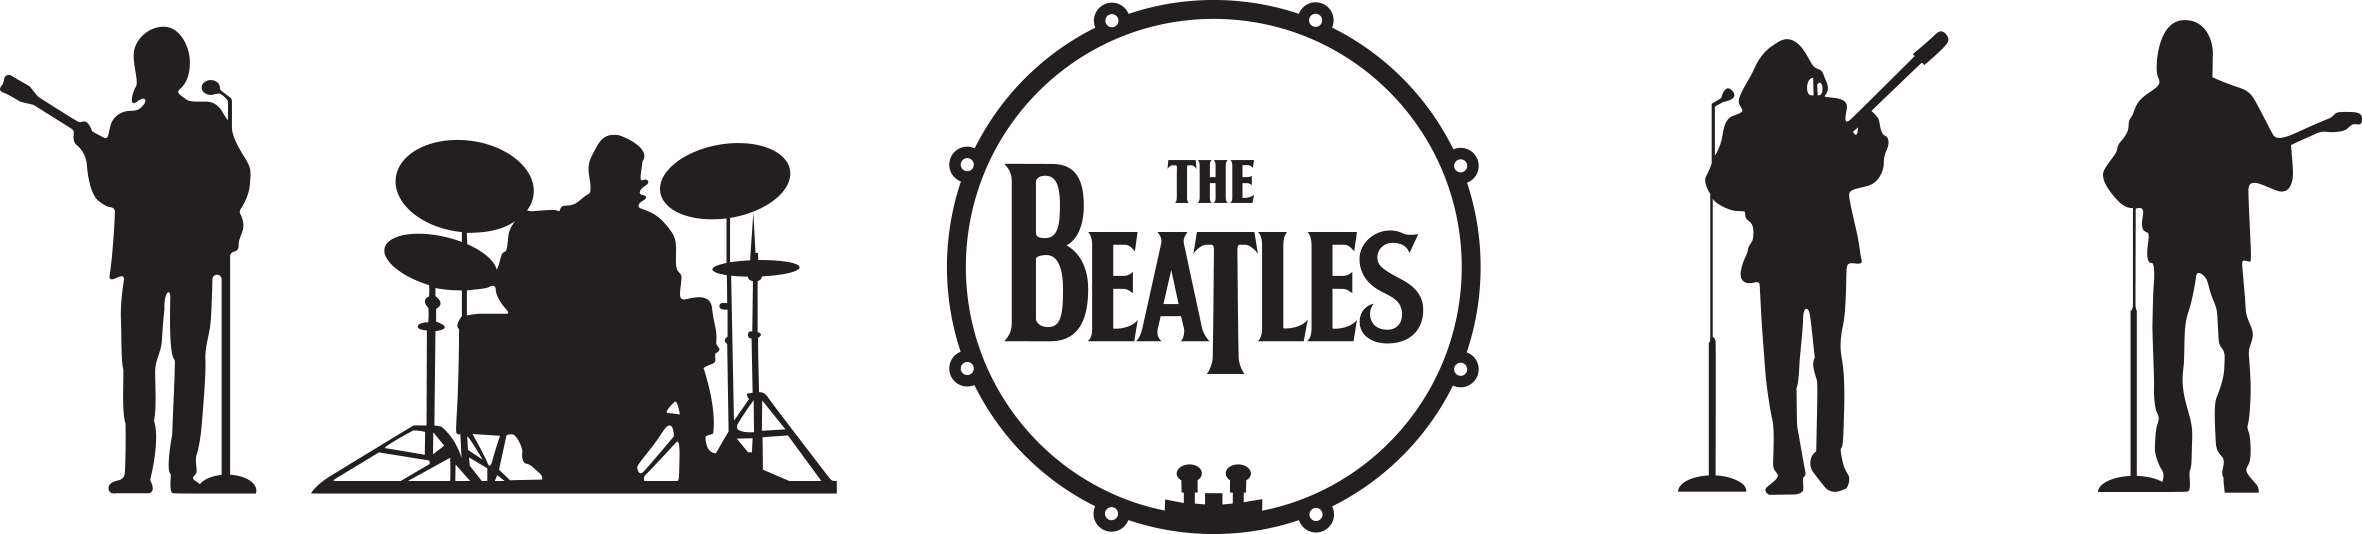 Beatles Harmonica Cover Logo